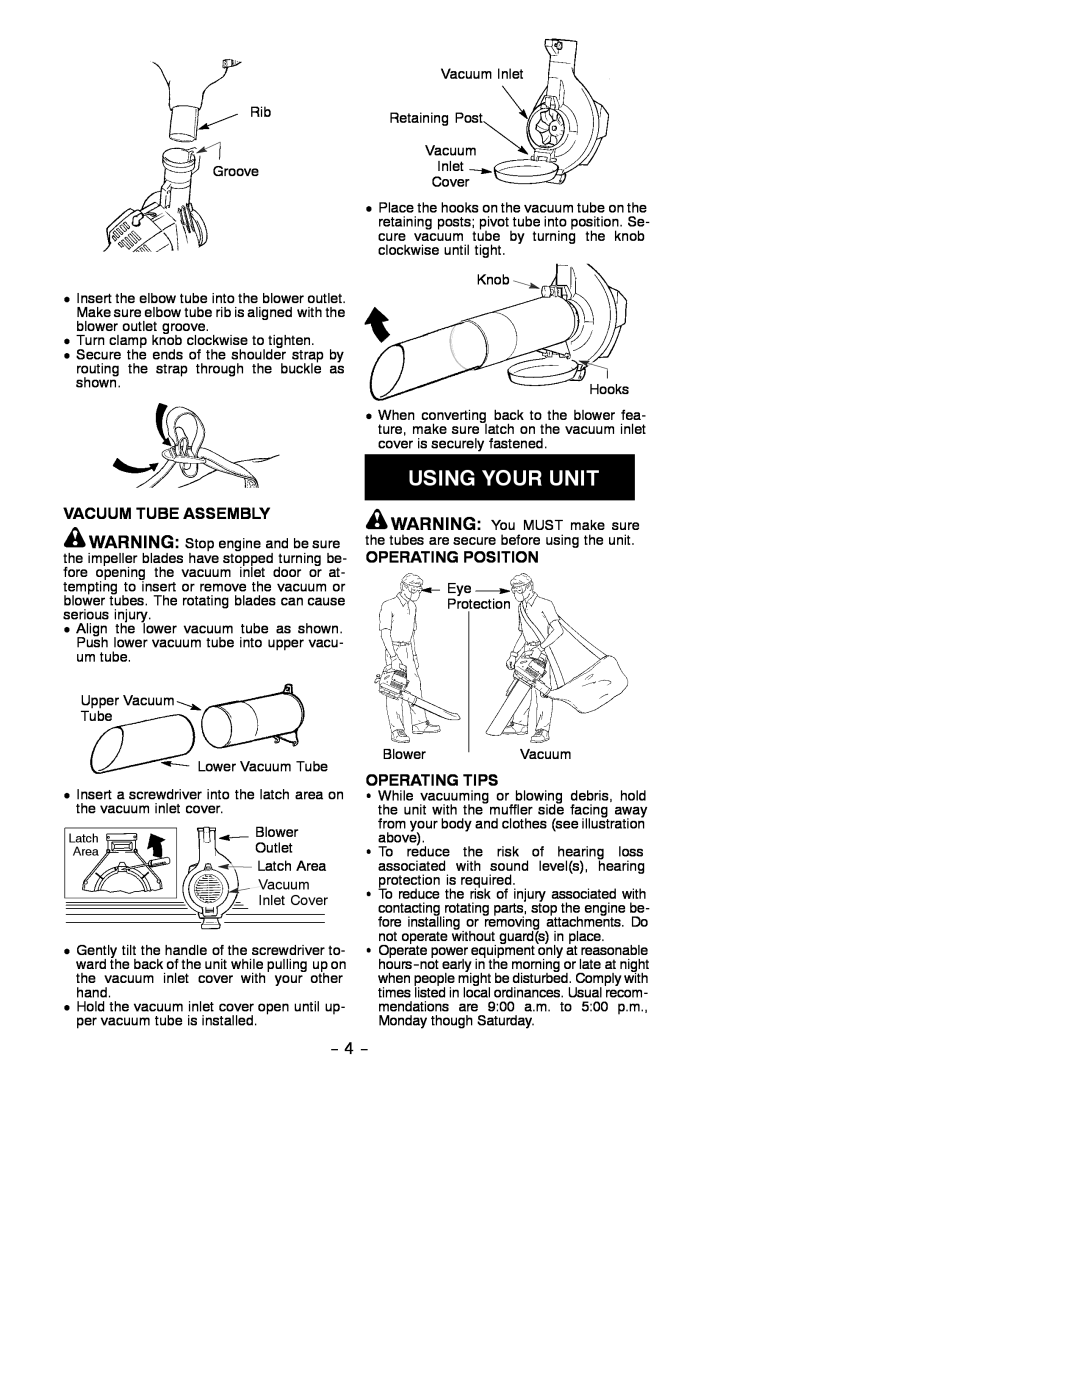 Poulan 530088953 instruction manual Vacuum Tube Assembly, Operating Position, Operating Tips 